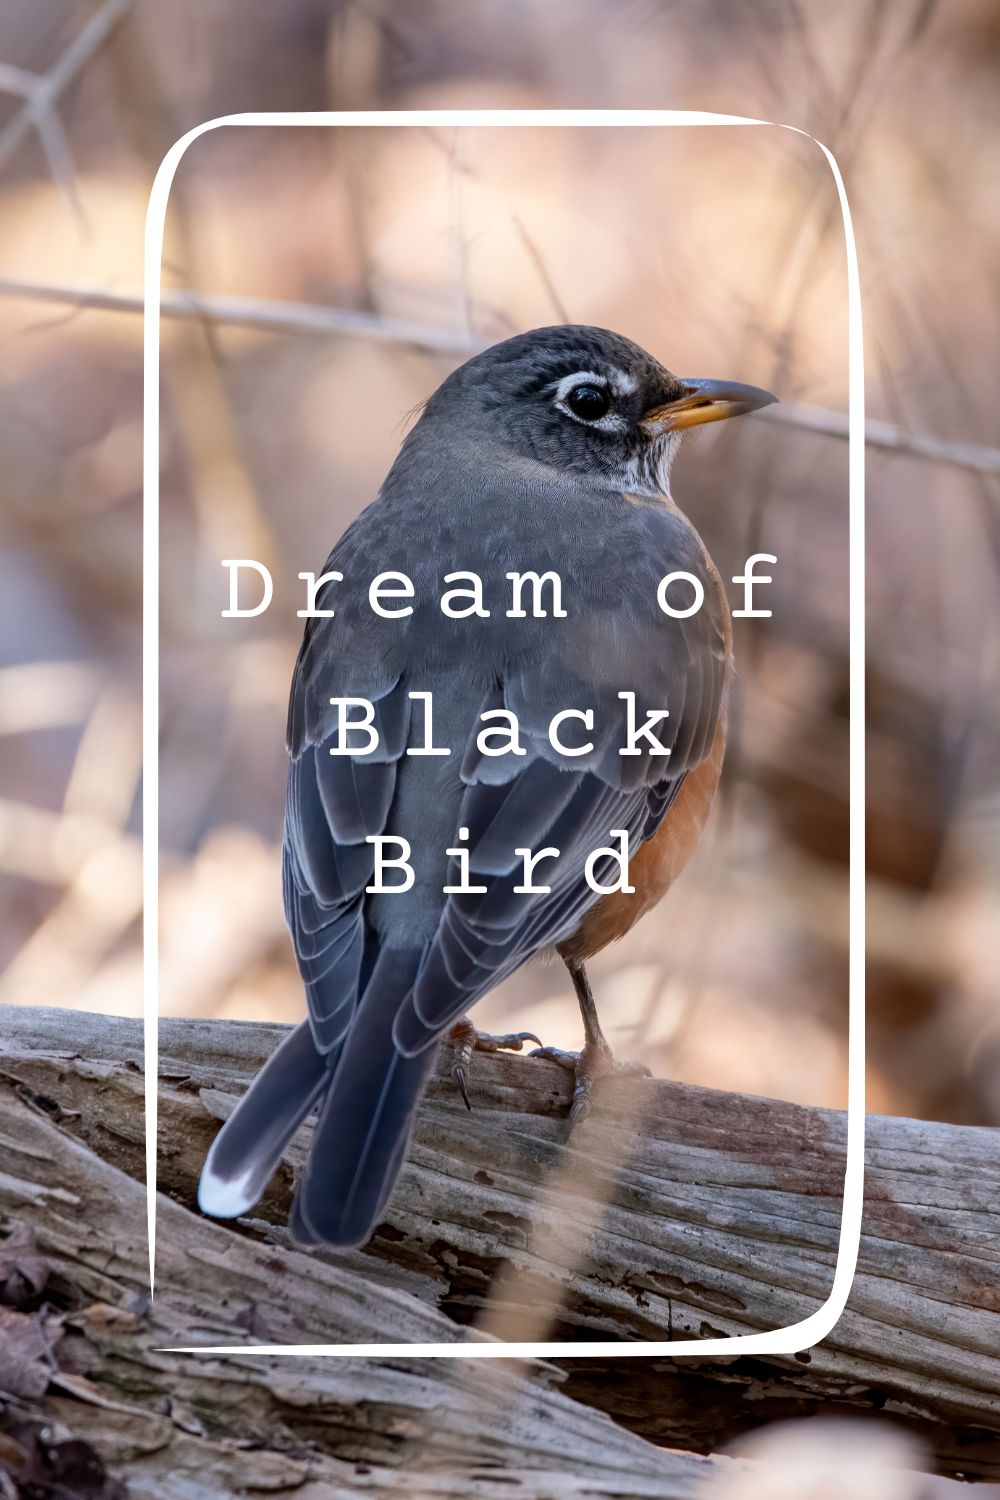 11 Dream of Black Bird Meanings4